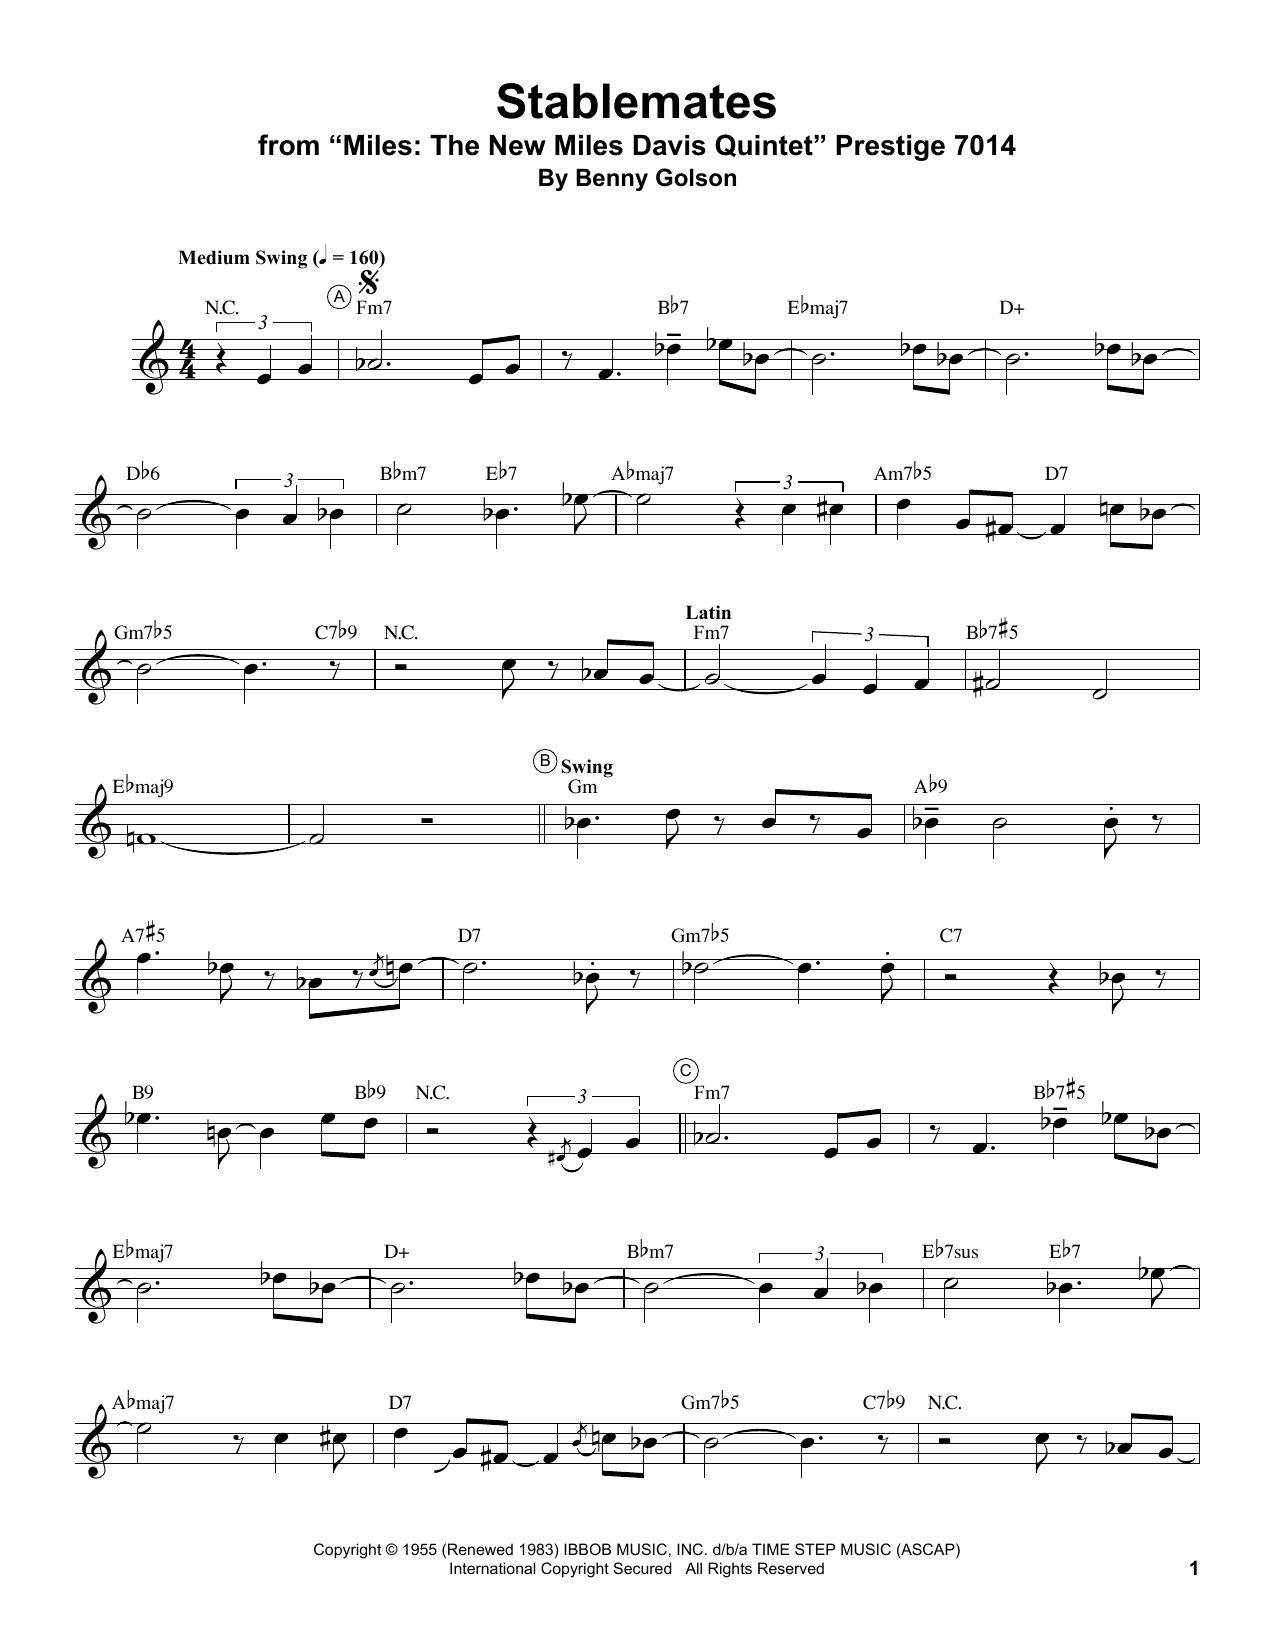 Miles Davis Stablemates Sheet Music Notes & Chords for Trumpet Transcription - Download or Print PDF